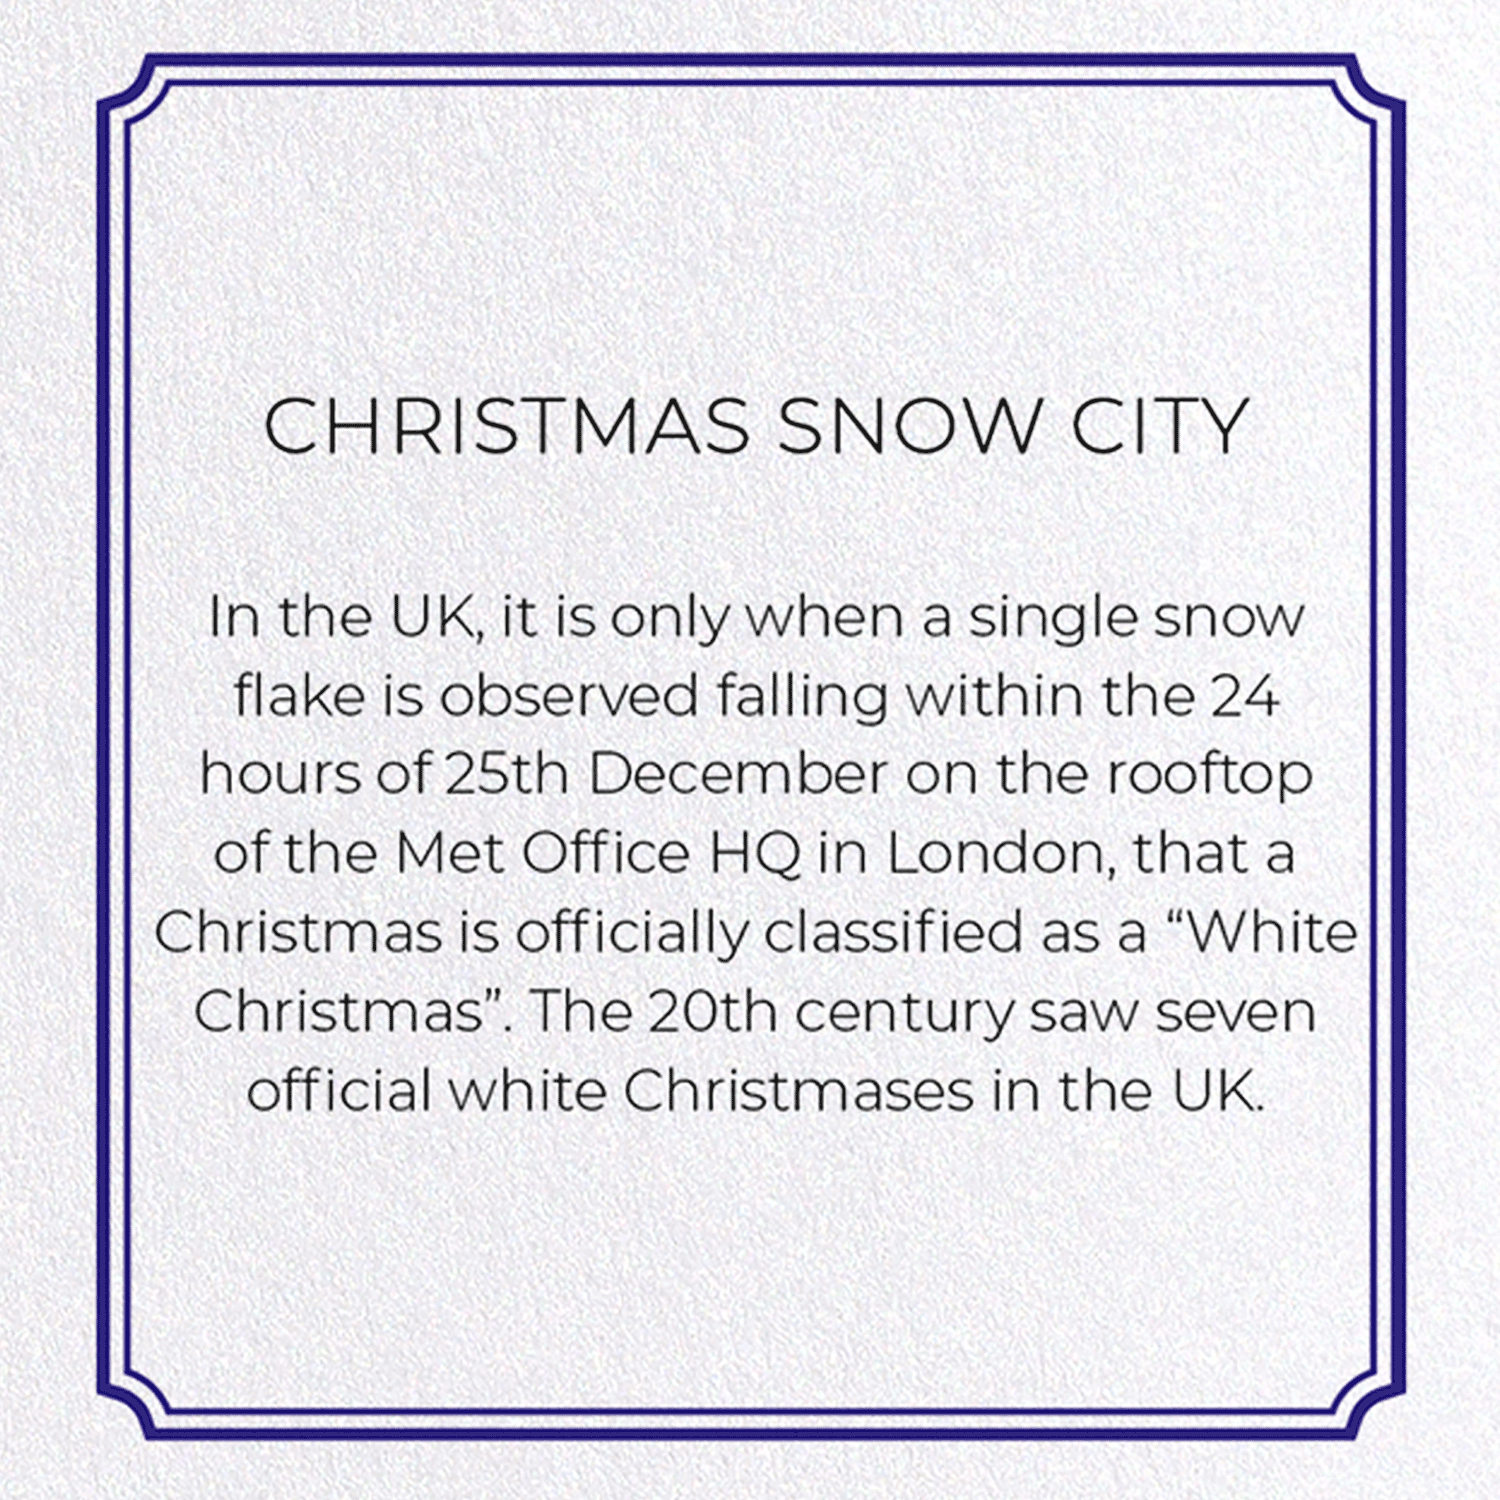 CHRISTMAS SNOW CITY